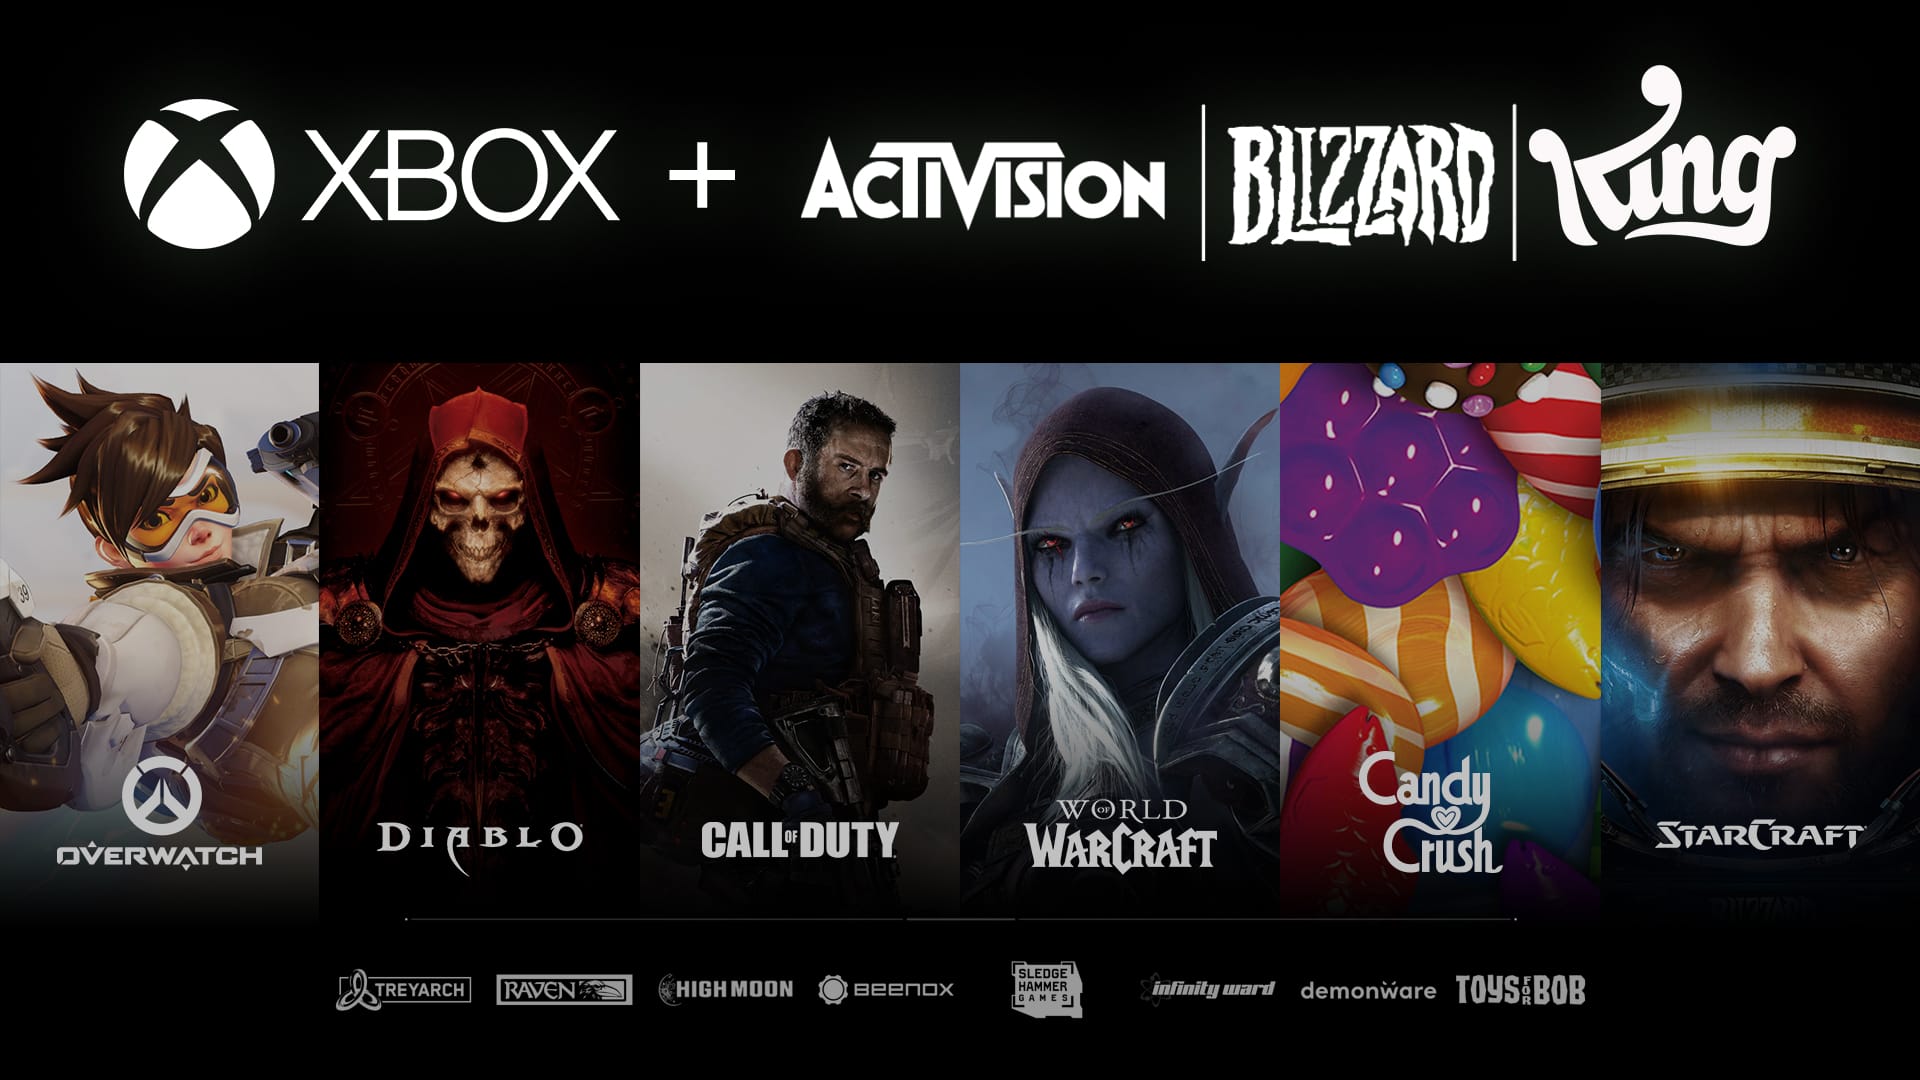 Microsoft Corp. announced plans to acquire Activision Blizzard Inc.